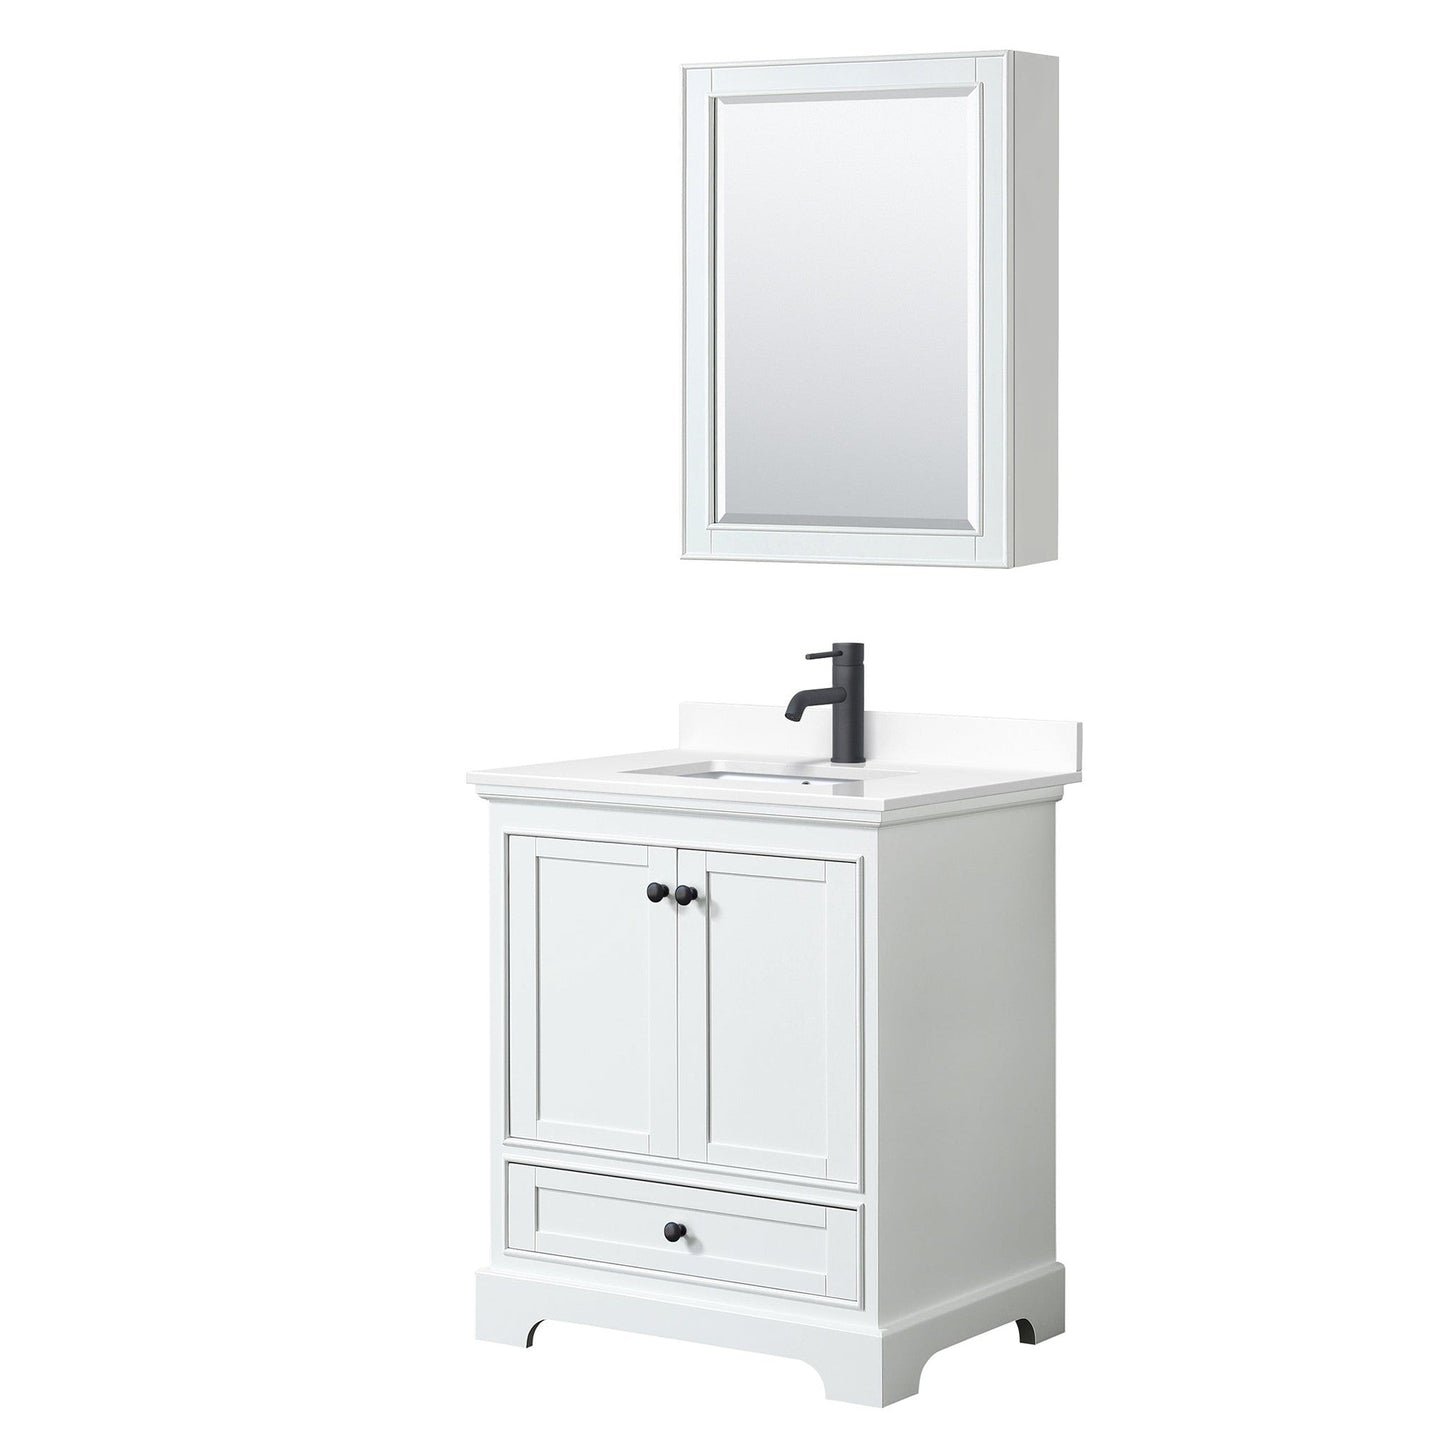 Deborah 30" Single Bathroom Vanity in White, White Cultured Marble Countertop, Undermount Square Sink, Matte Black Trim, Medicine Cabinet